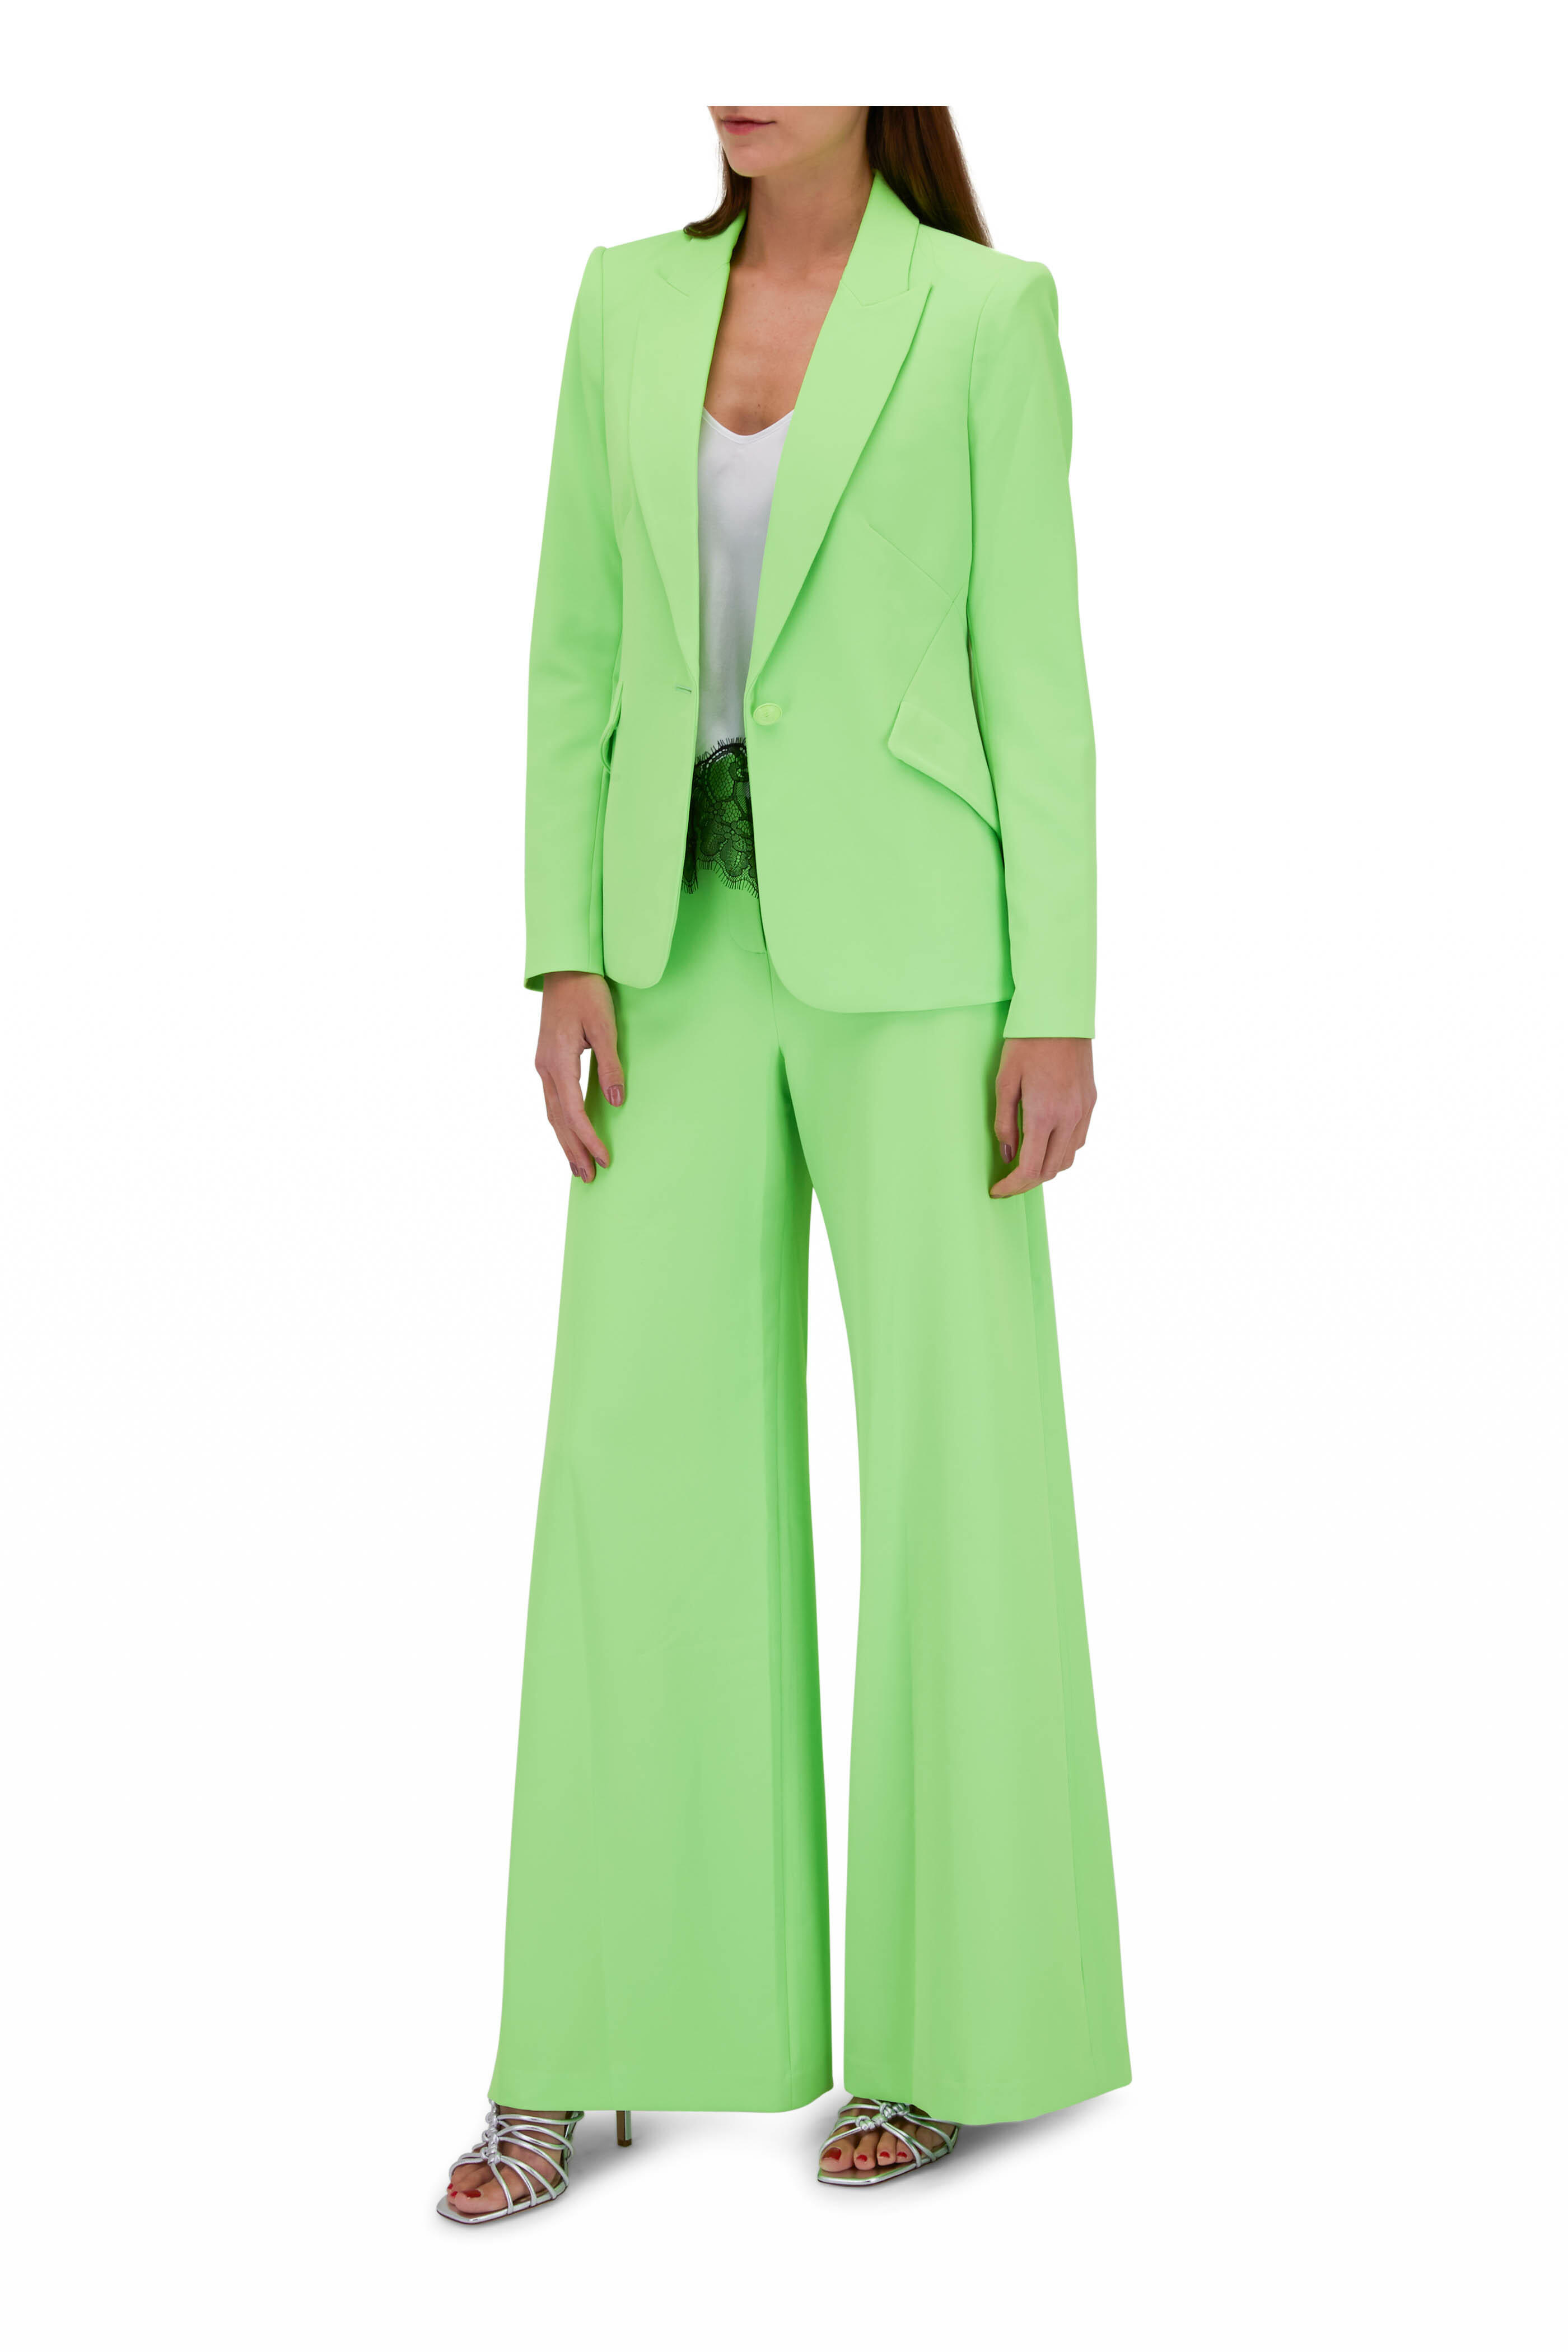 L'Agence - Chamberlain Lime Green Blazer | Mitchell Stores